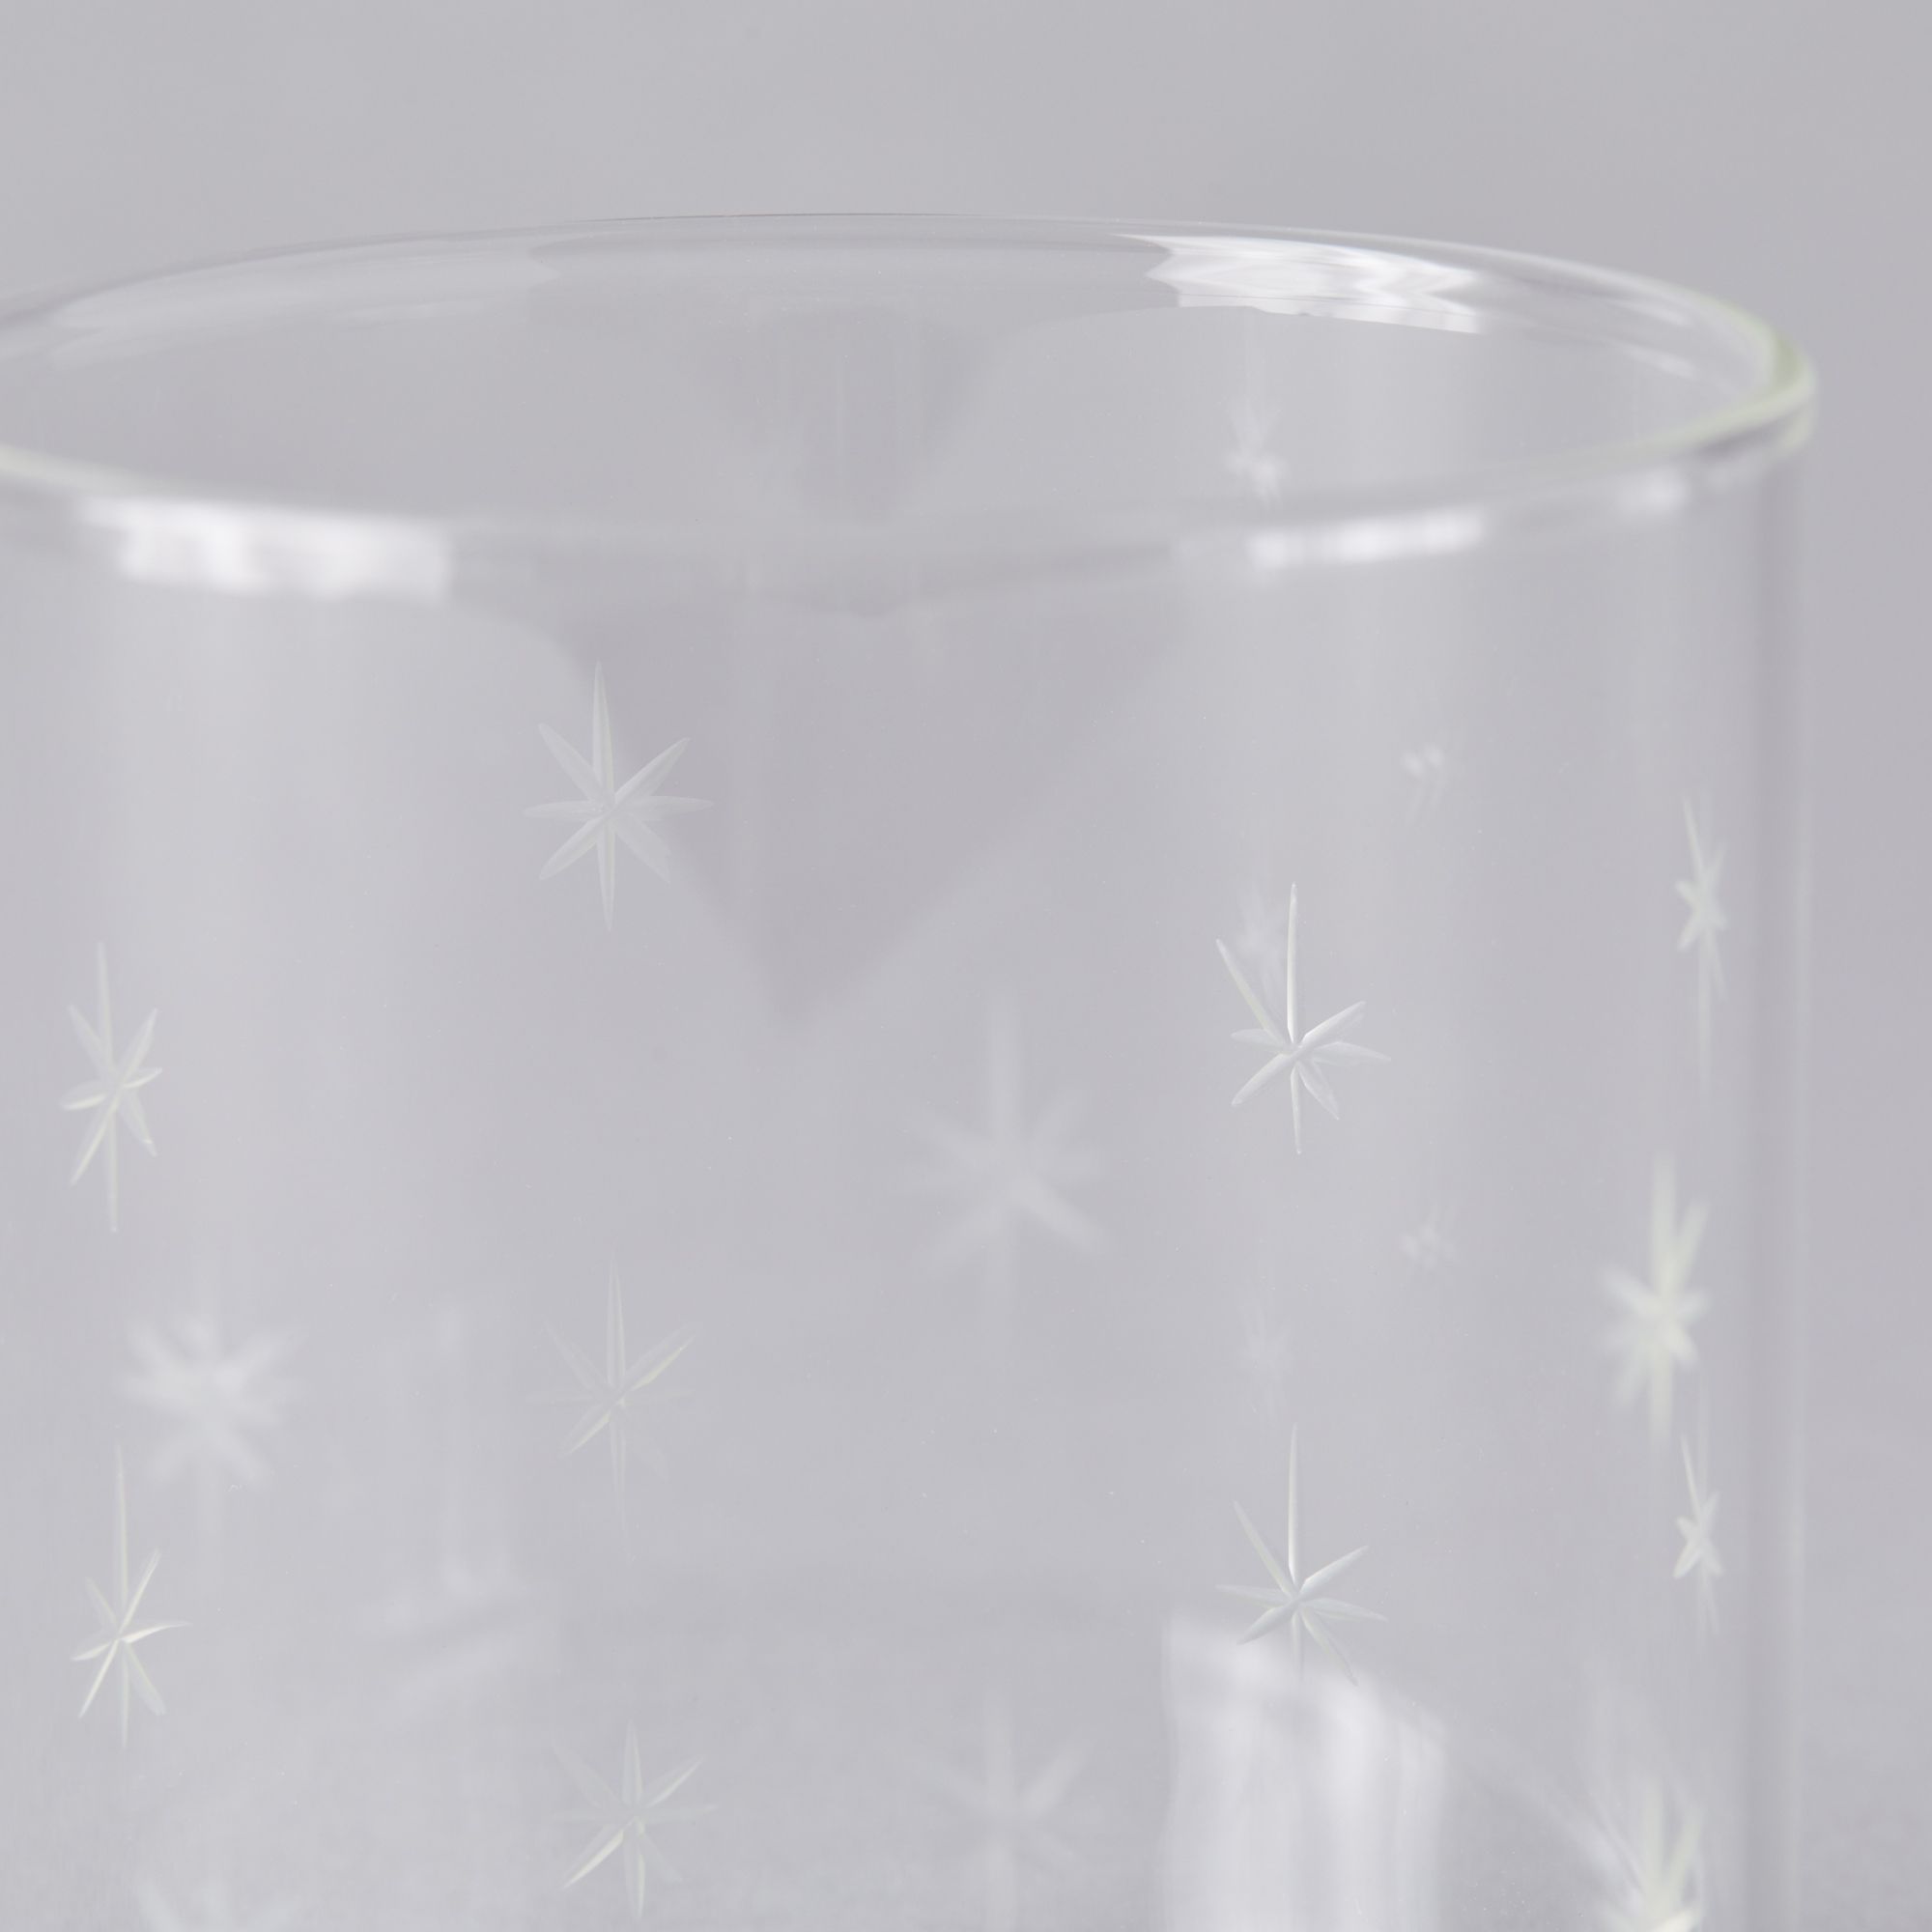 Details about   Borosil Vision Glass Tumbler Sets 6 Pcs Set Printed Drink Glasses 